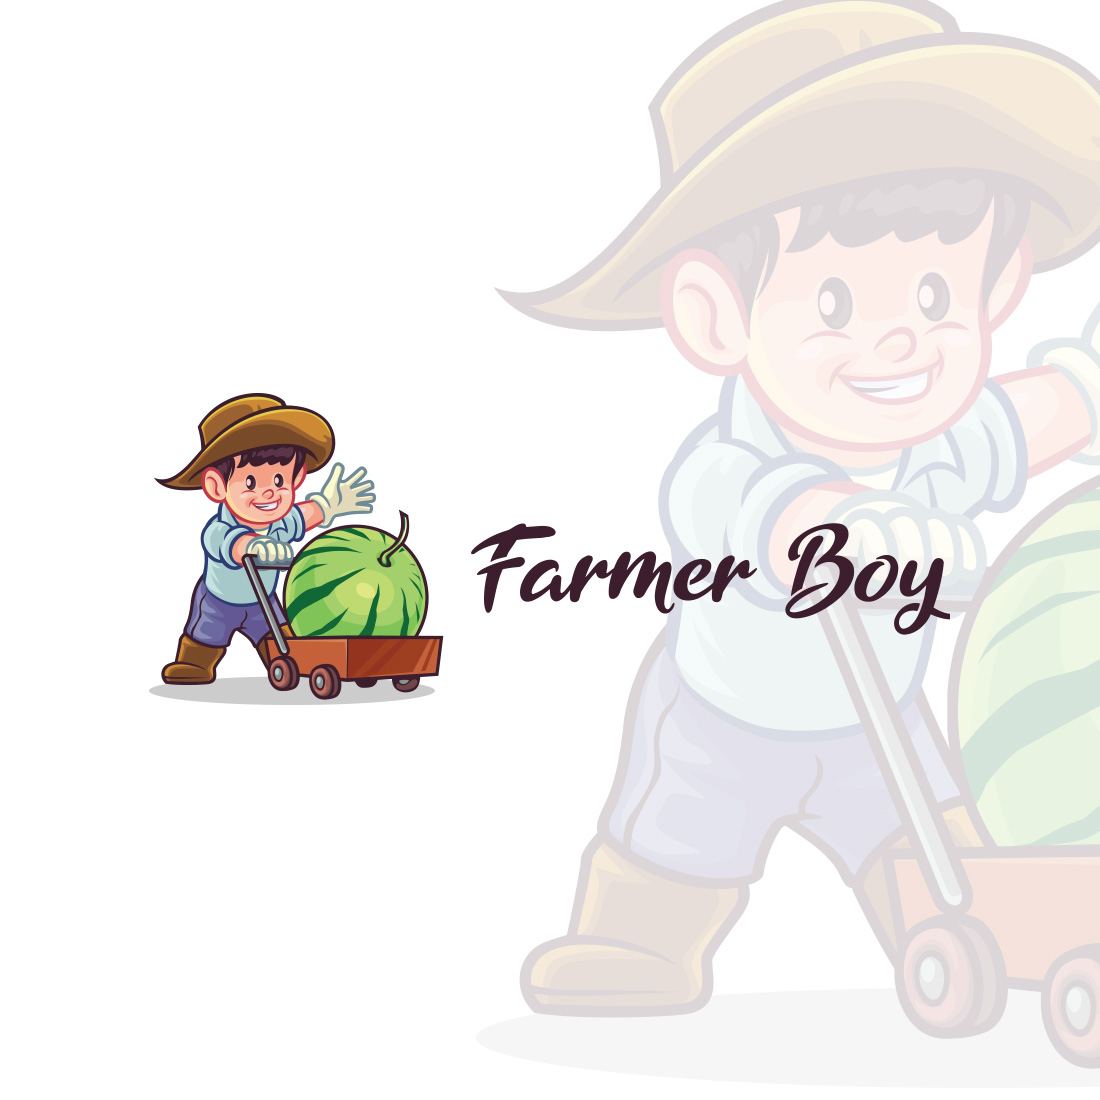 Farmer Boy cover image.